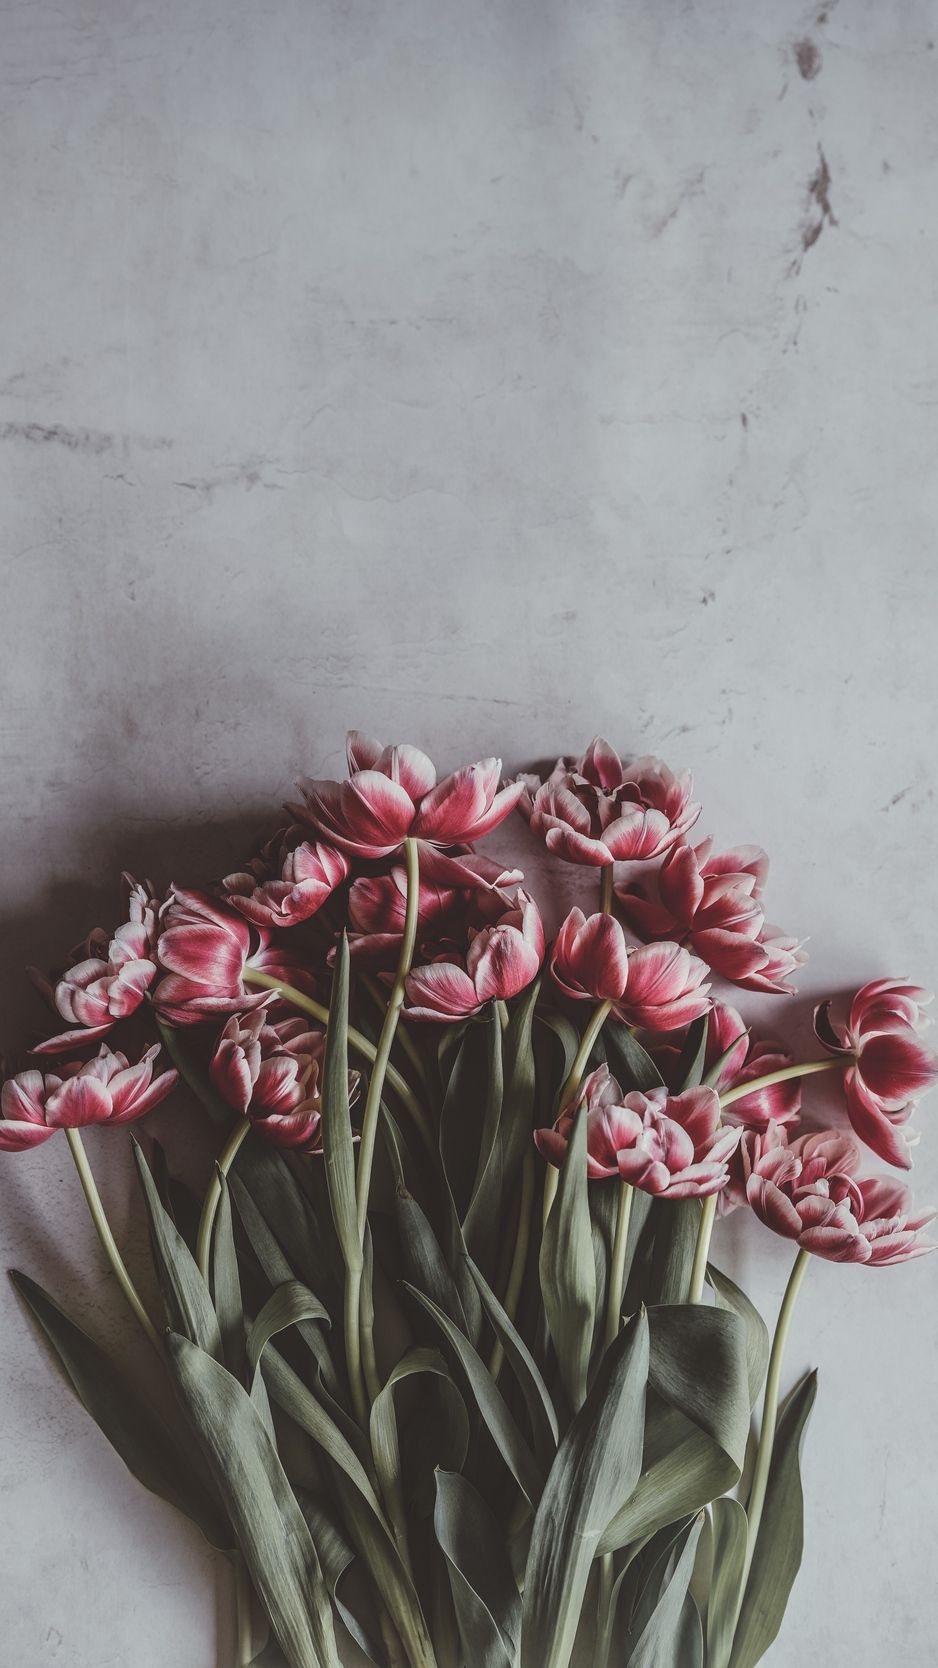 Download wallpaper 938x1668 tulips, bouquet, flowers, buds, stems